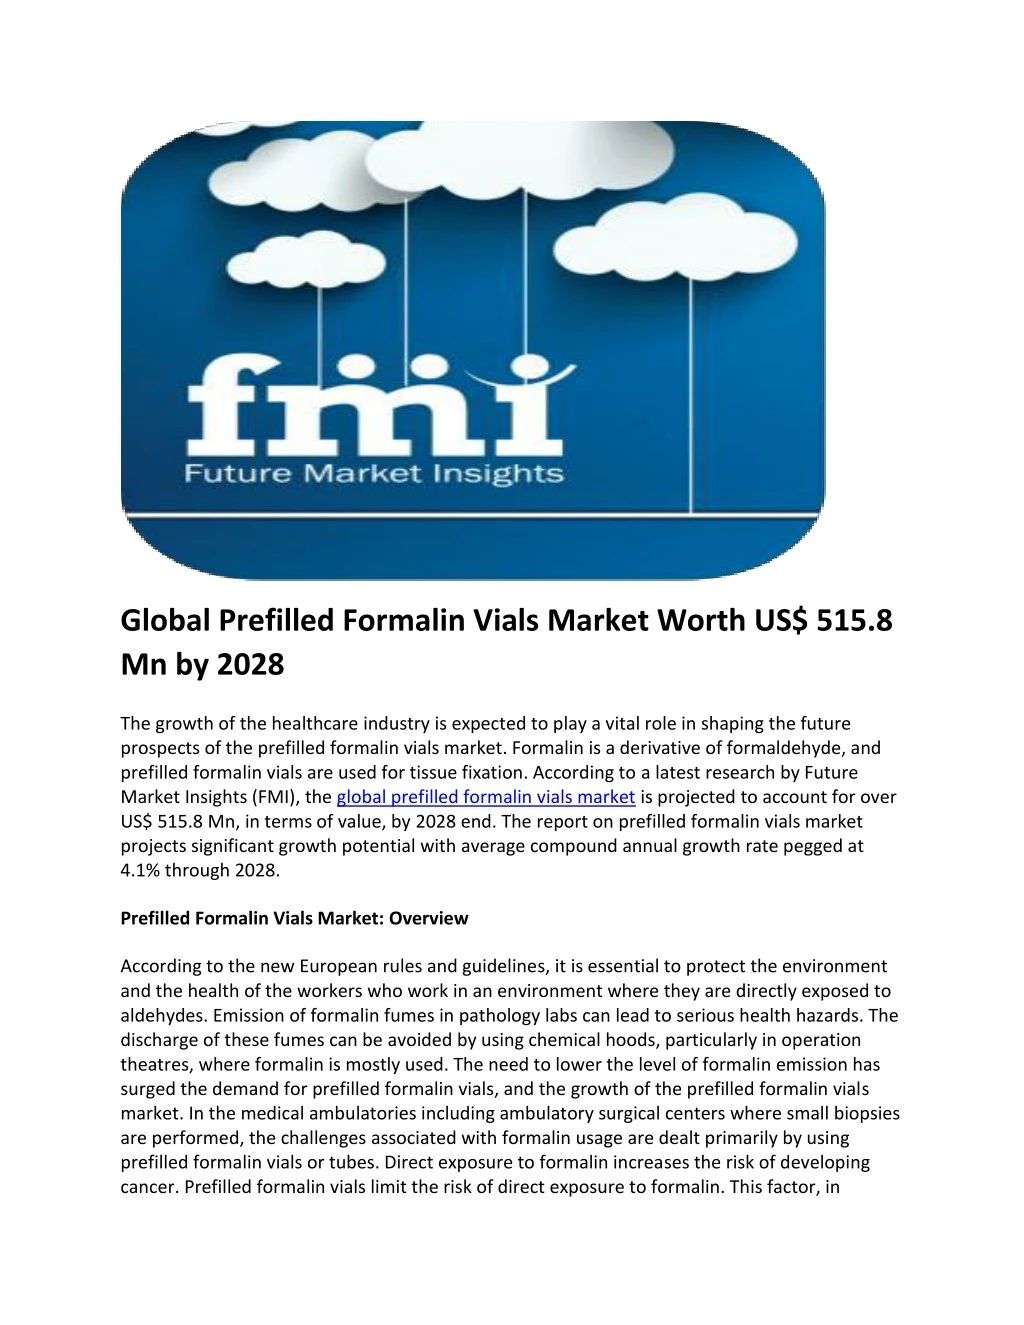 global prefilled formalin vials market worth